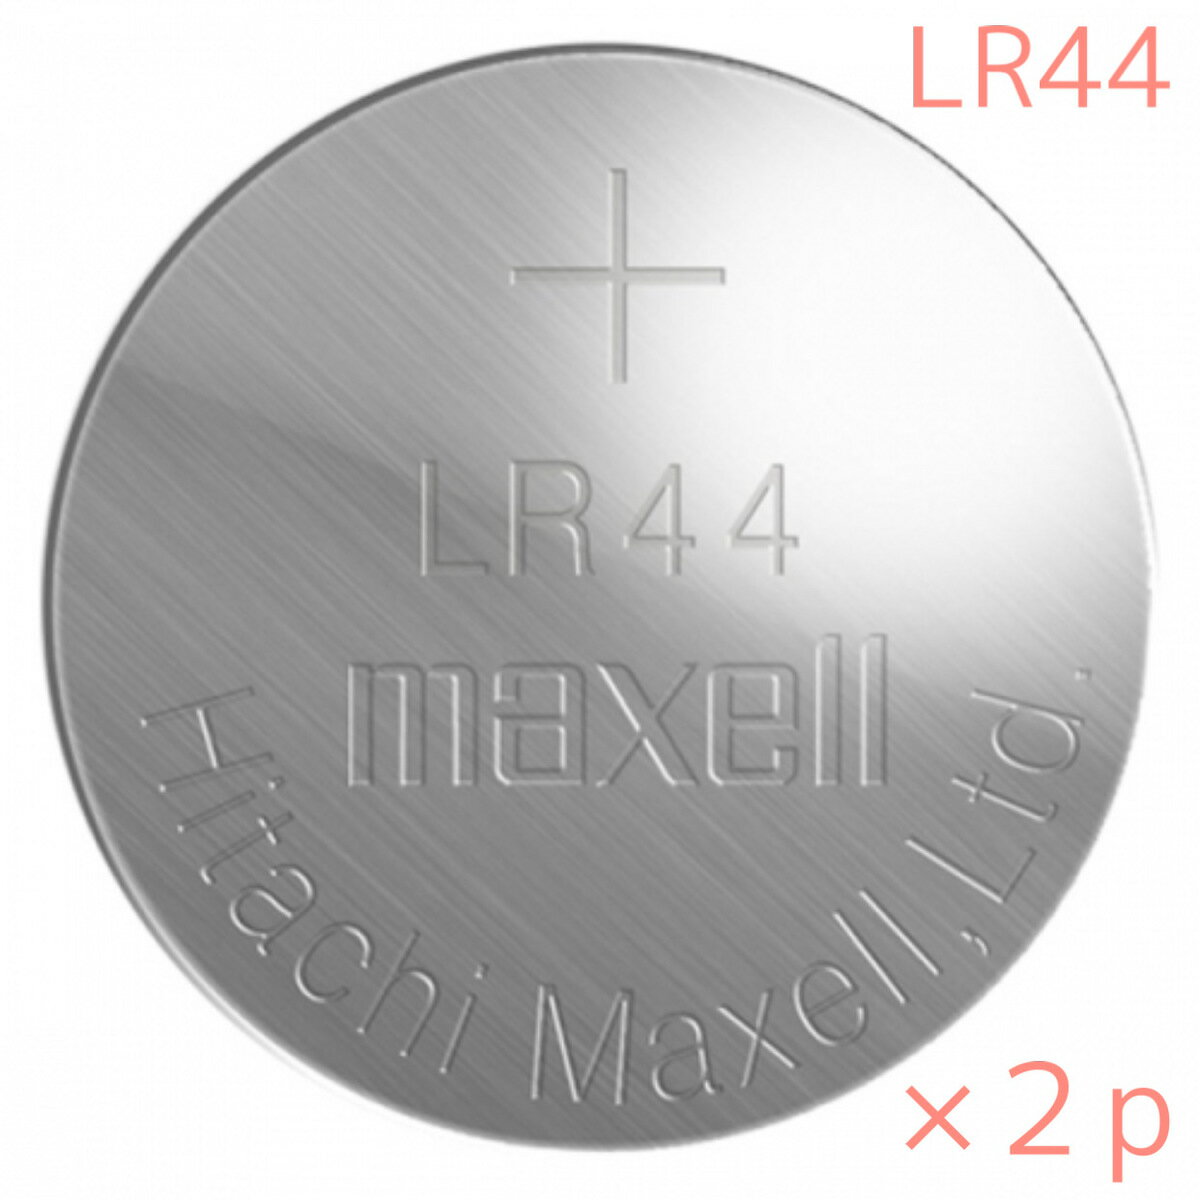 LR44 ボタン電池 maxell アルカリボタン電池 2個入り(バラ売り)